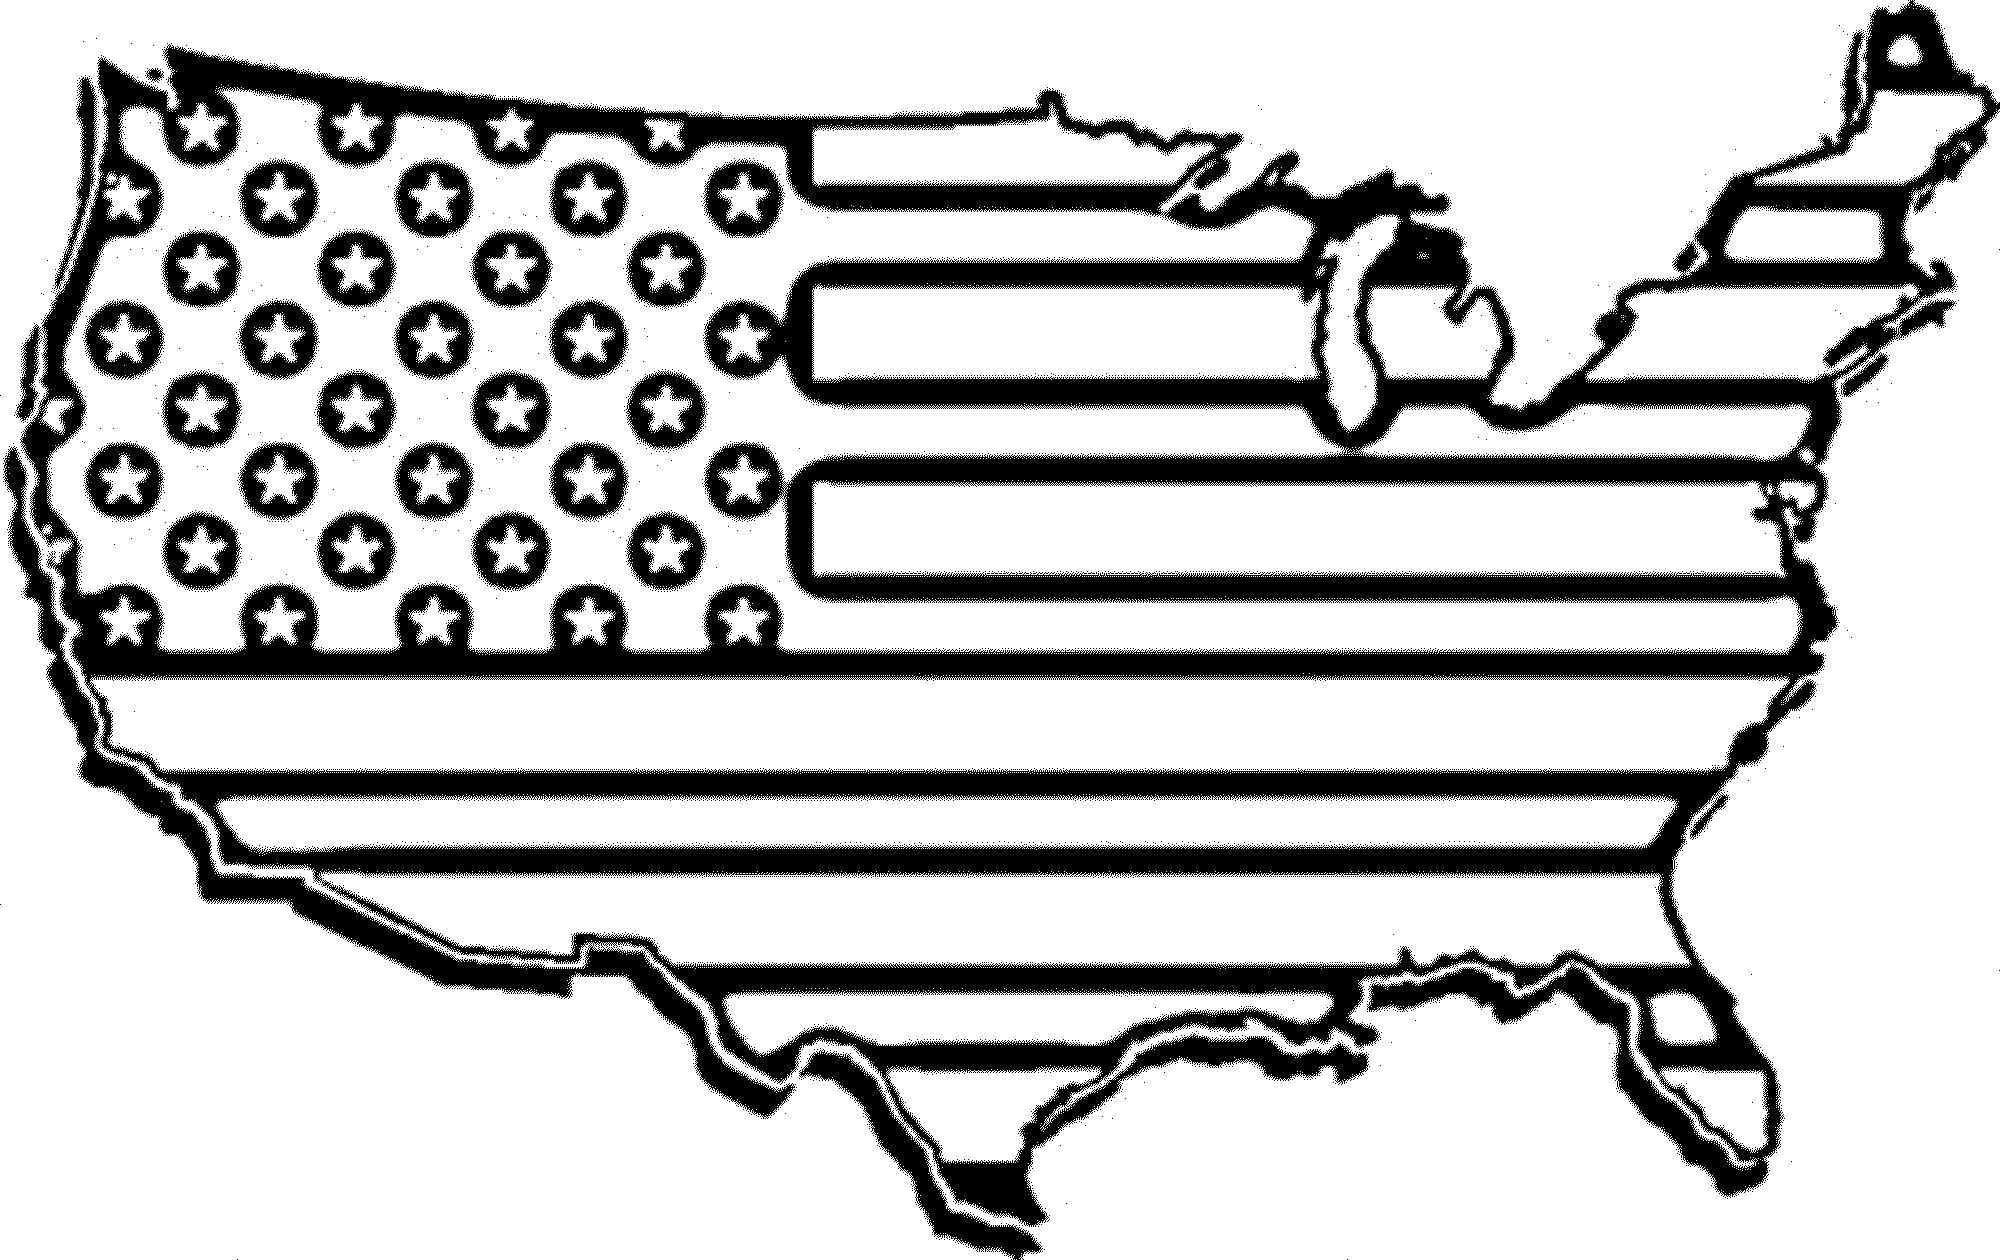 Coloring USA map. Category USA . Tags:  USA, America, map.